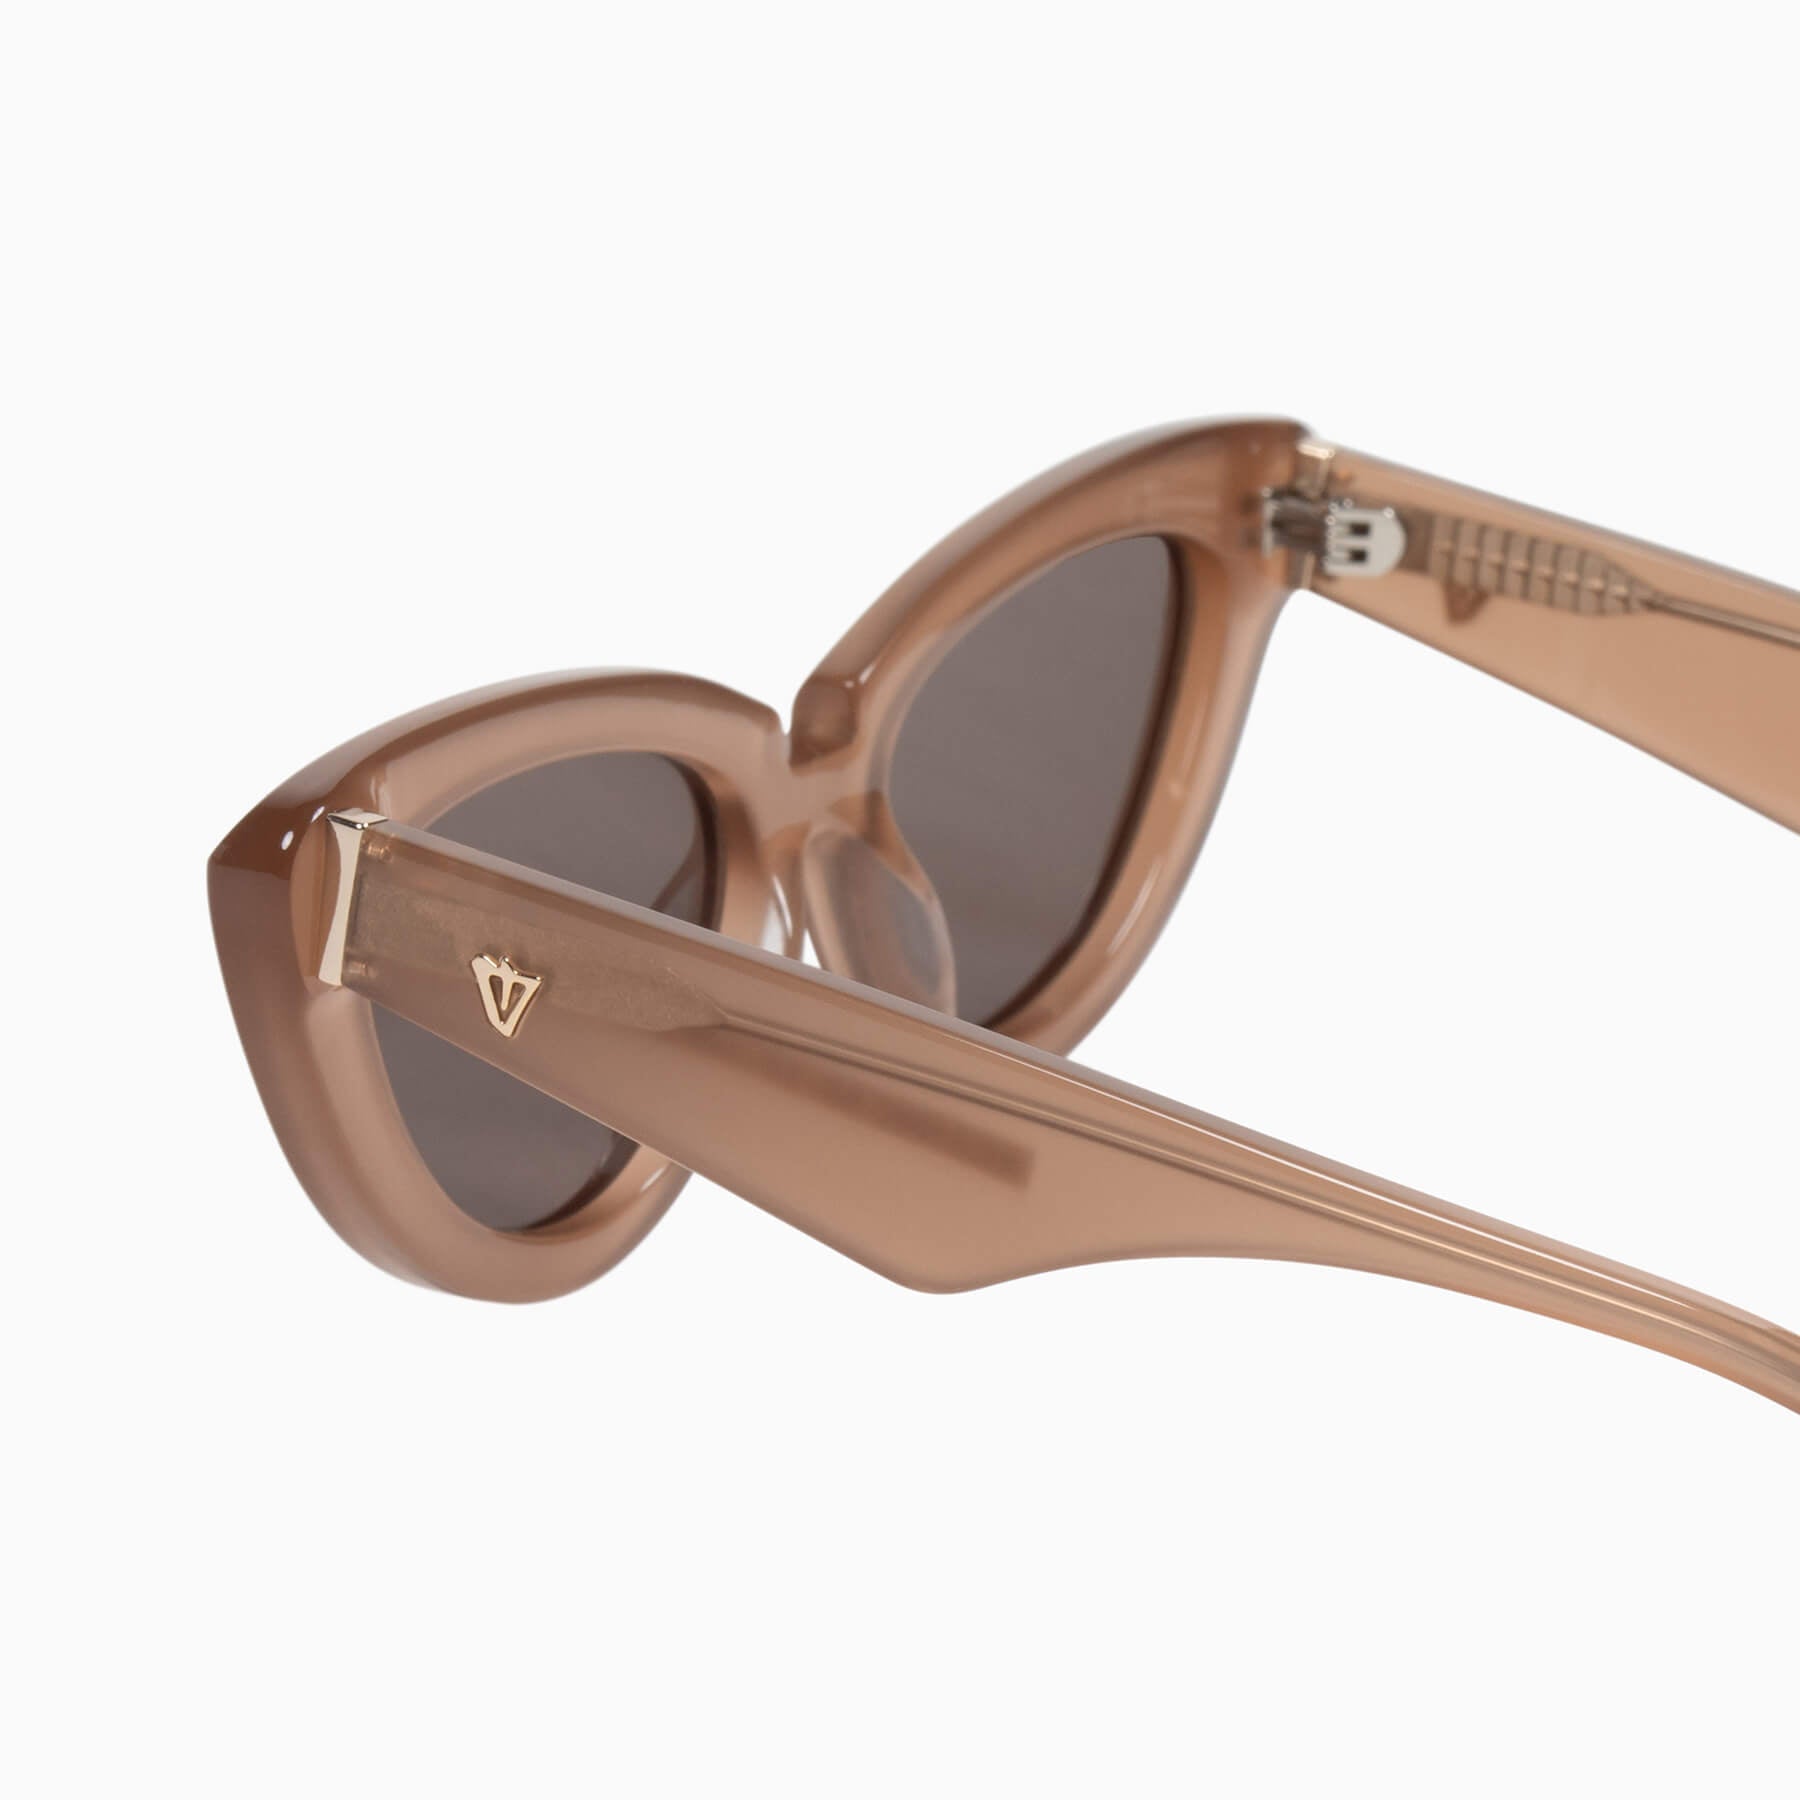 Valley Eyewear | Dayze | Sunglasses - Chestnut w. Gold Metal Trim / Brown Lens